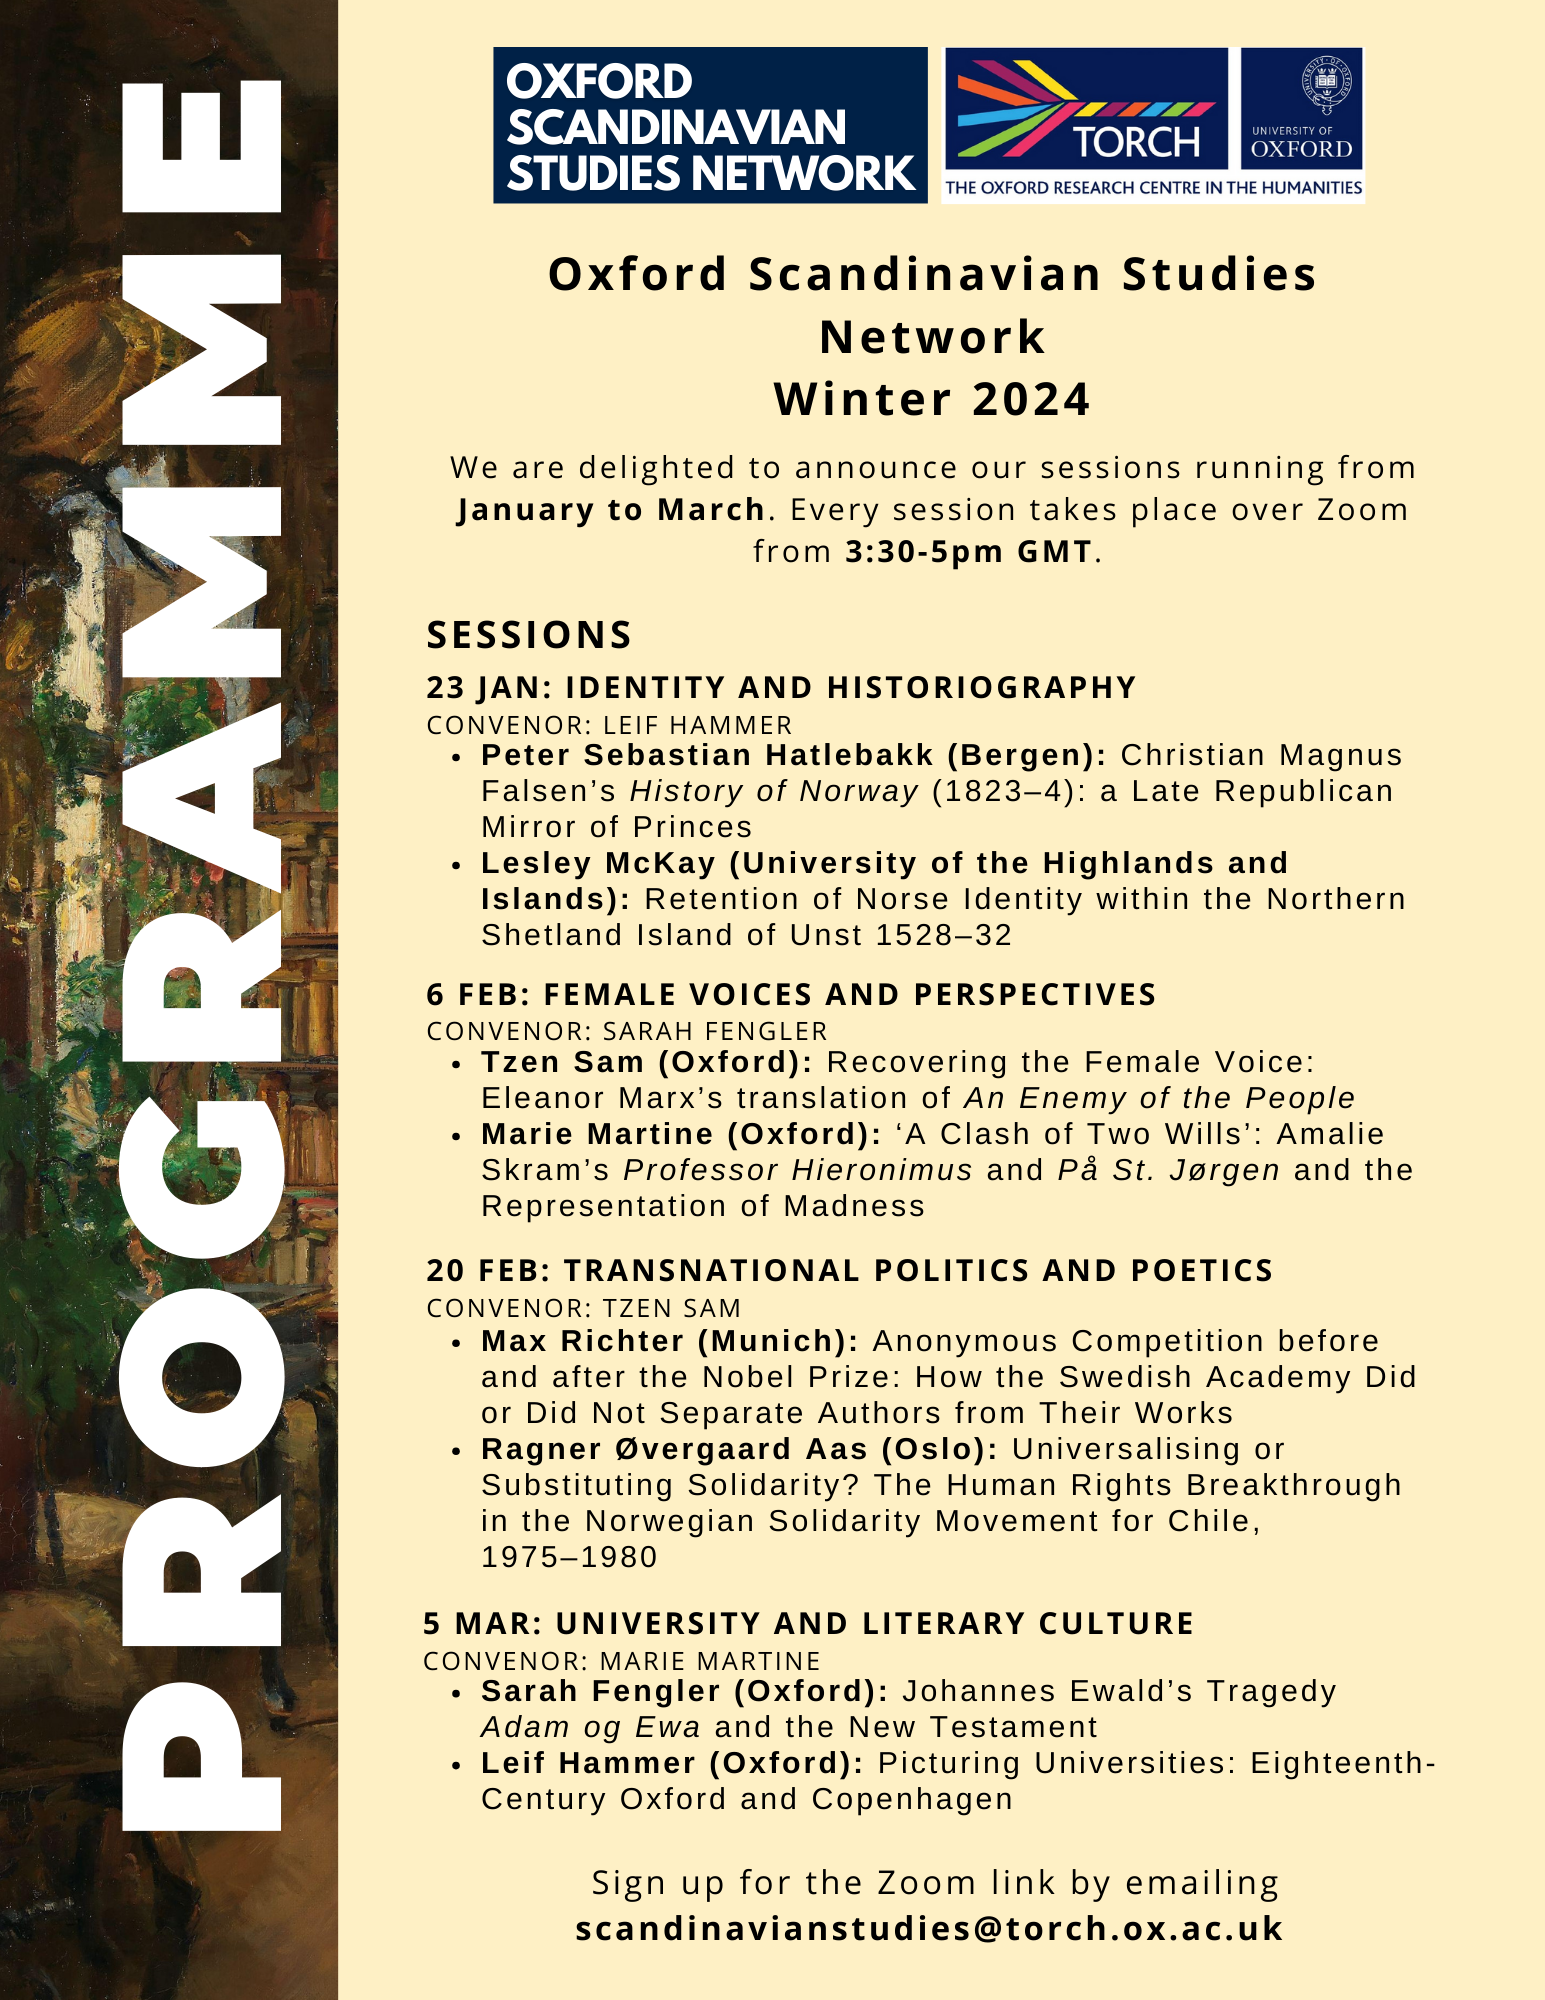 oxford scandinavian studies winter 2024 programme image